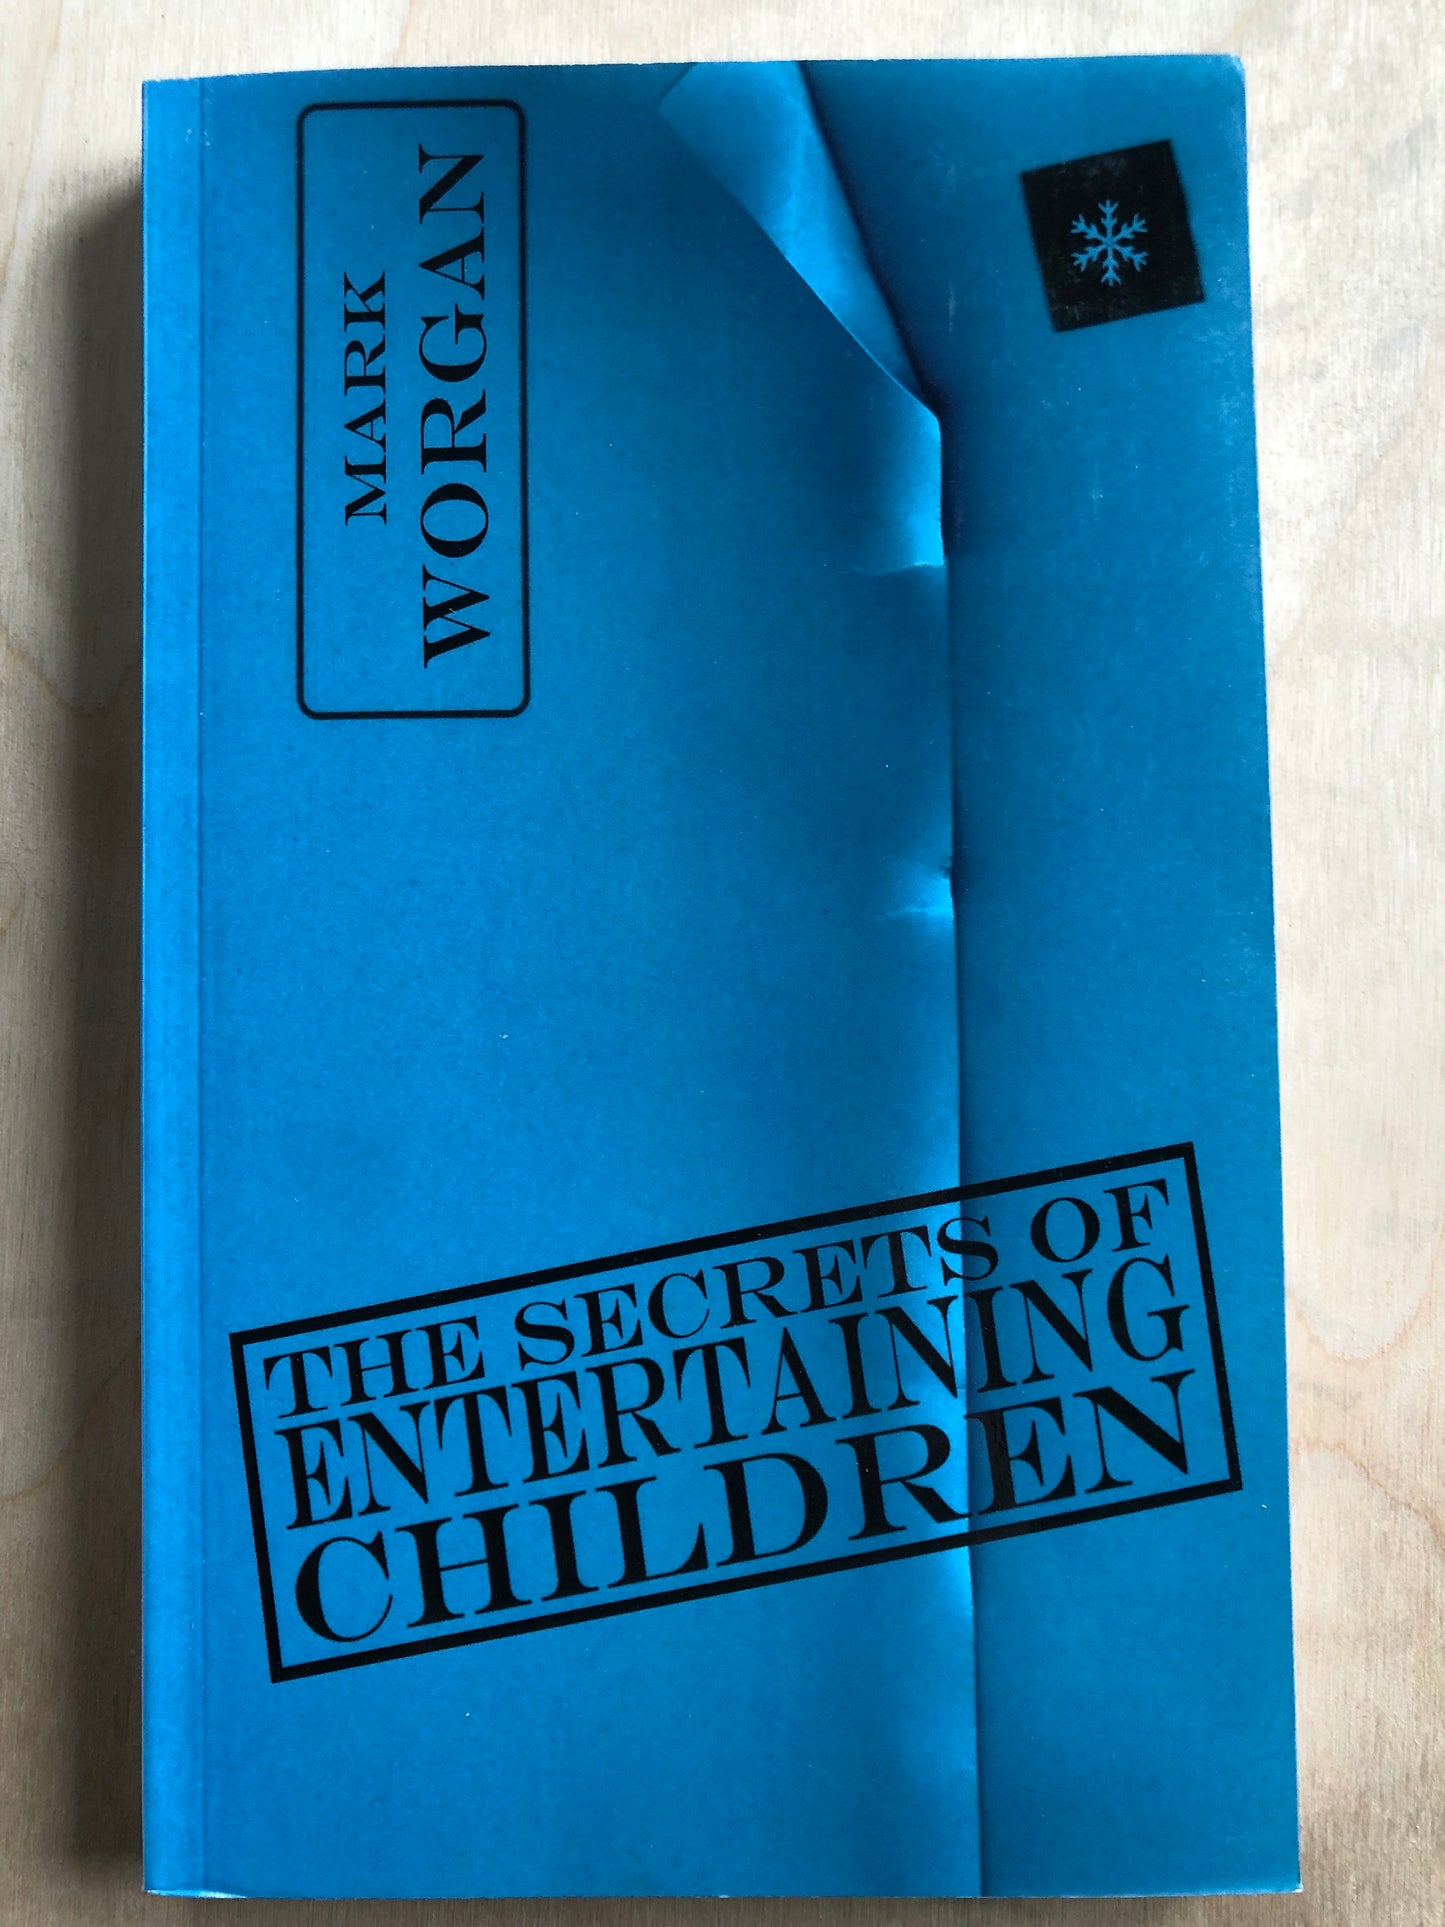 The Secrets of Entertaining Children - Mark Worgan